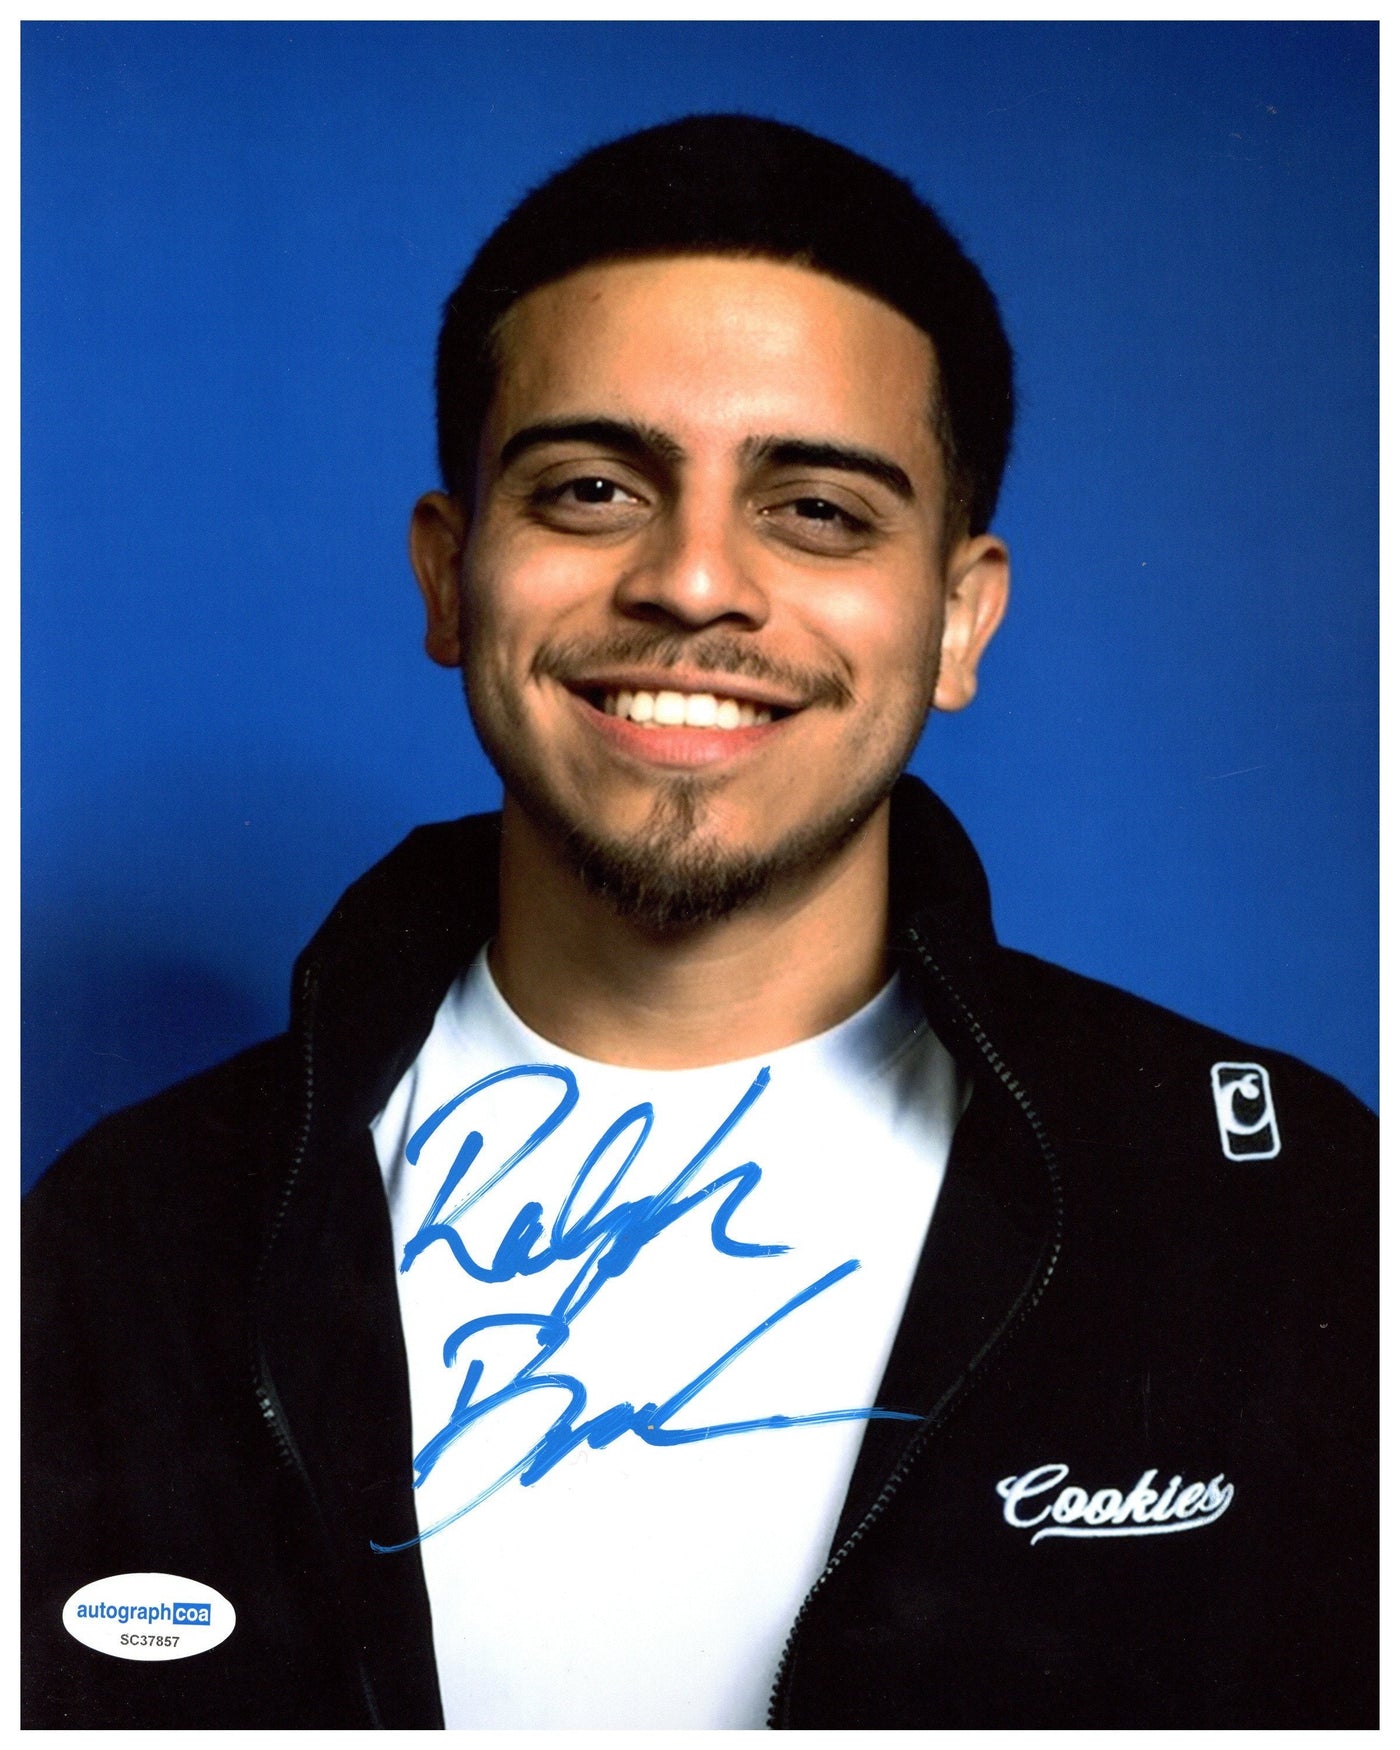 Ralph Barbosa Signed 8x10 Photo Comedy Autographed Autograph COA